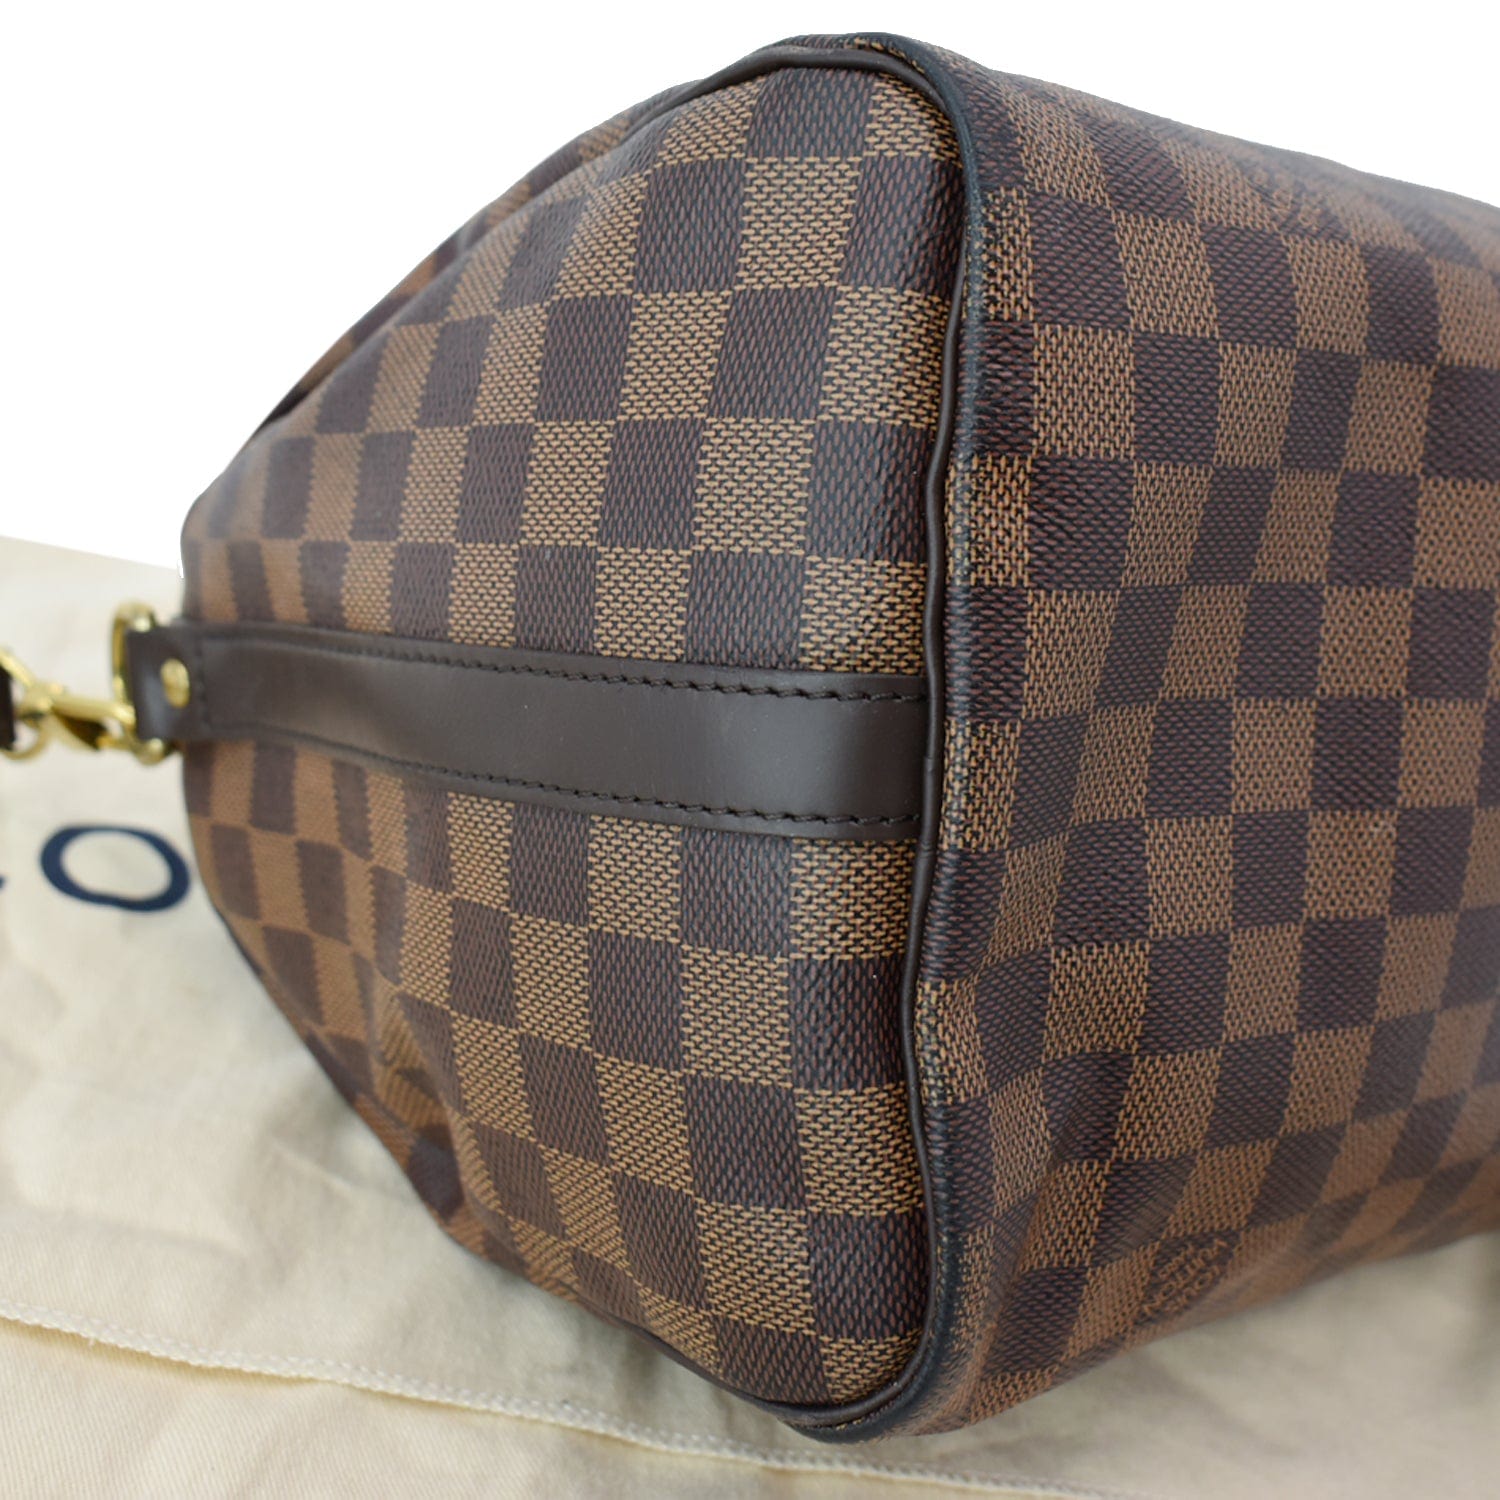 Louis Vuitton Speedy Bandouliere Bag Damier 30 Brown 2354651